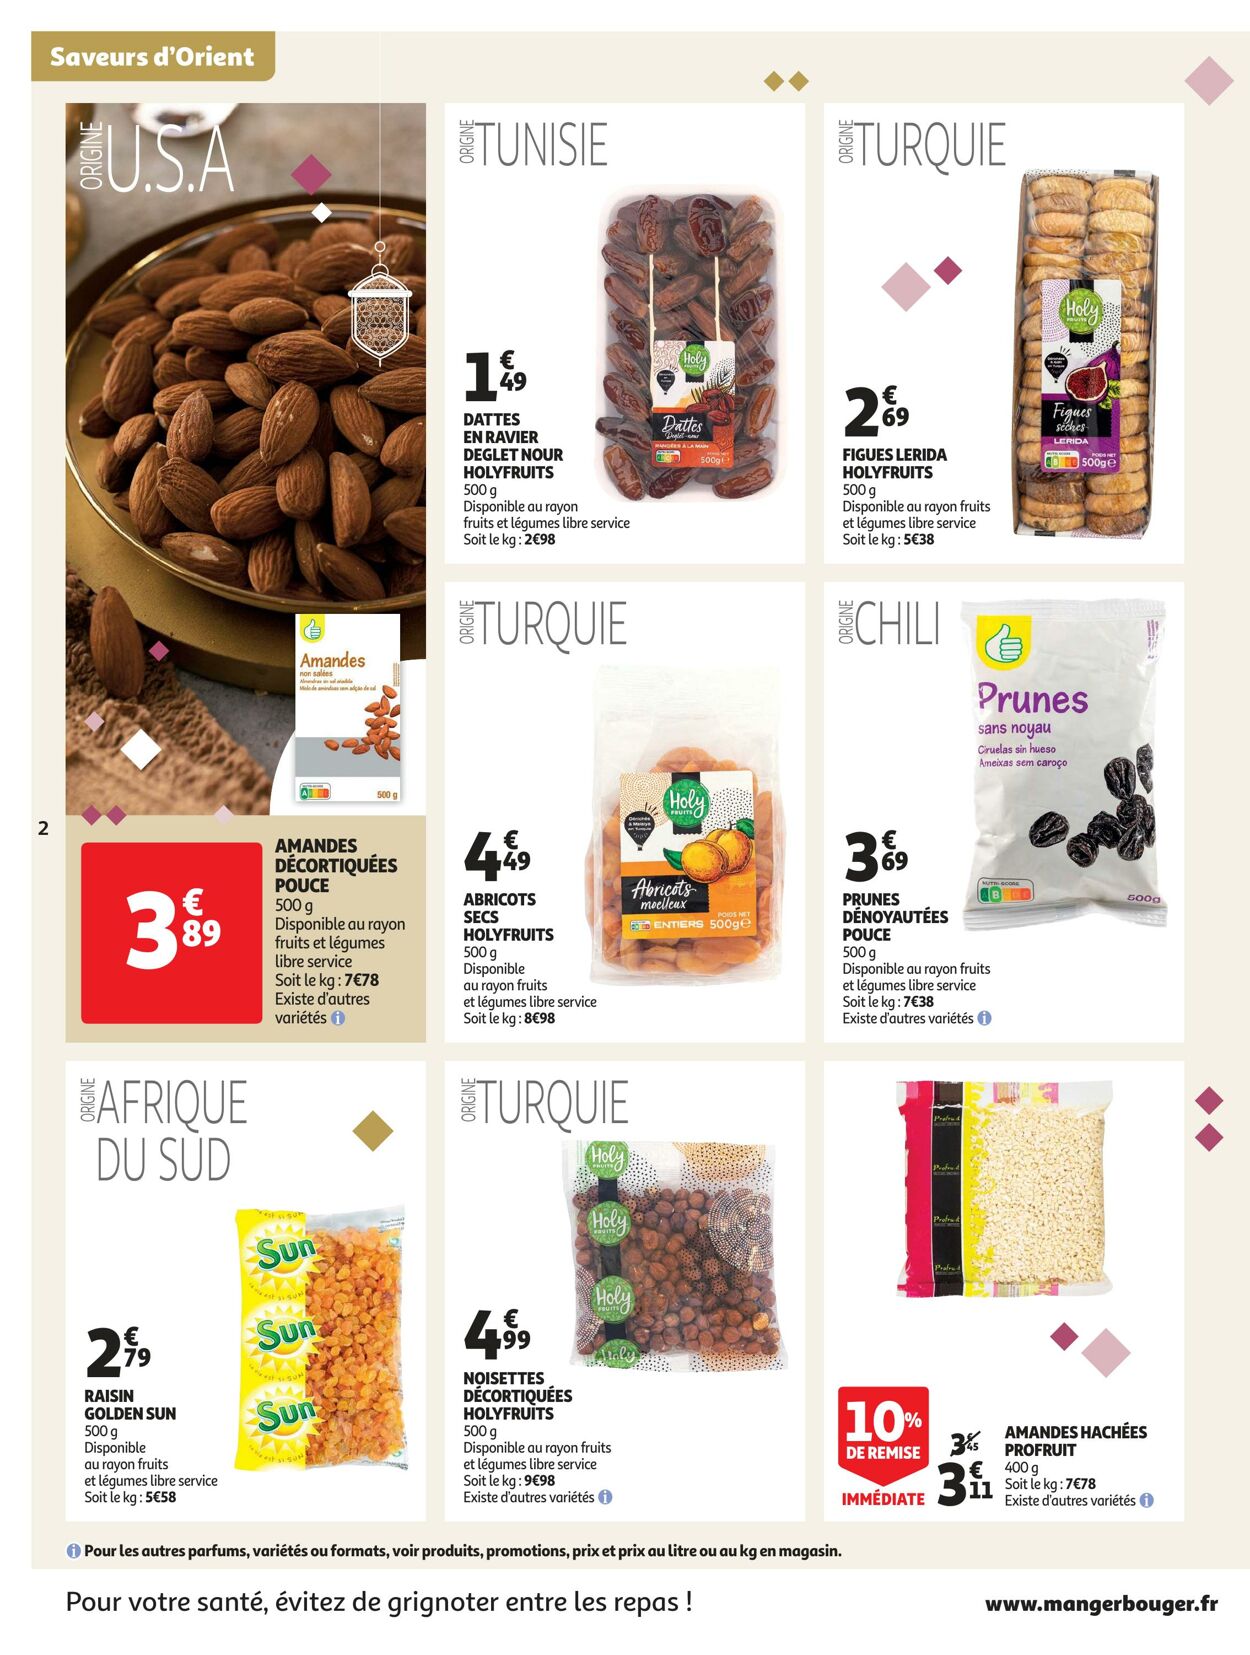 Catalogue Auchan 07.03.2023 - 03.04.2023